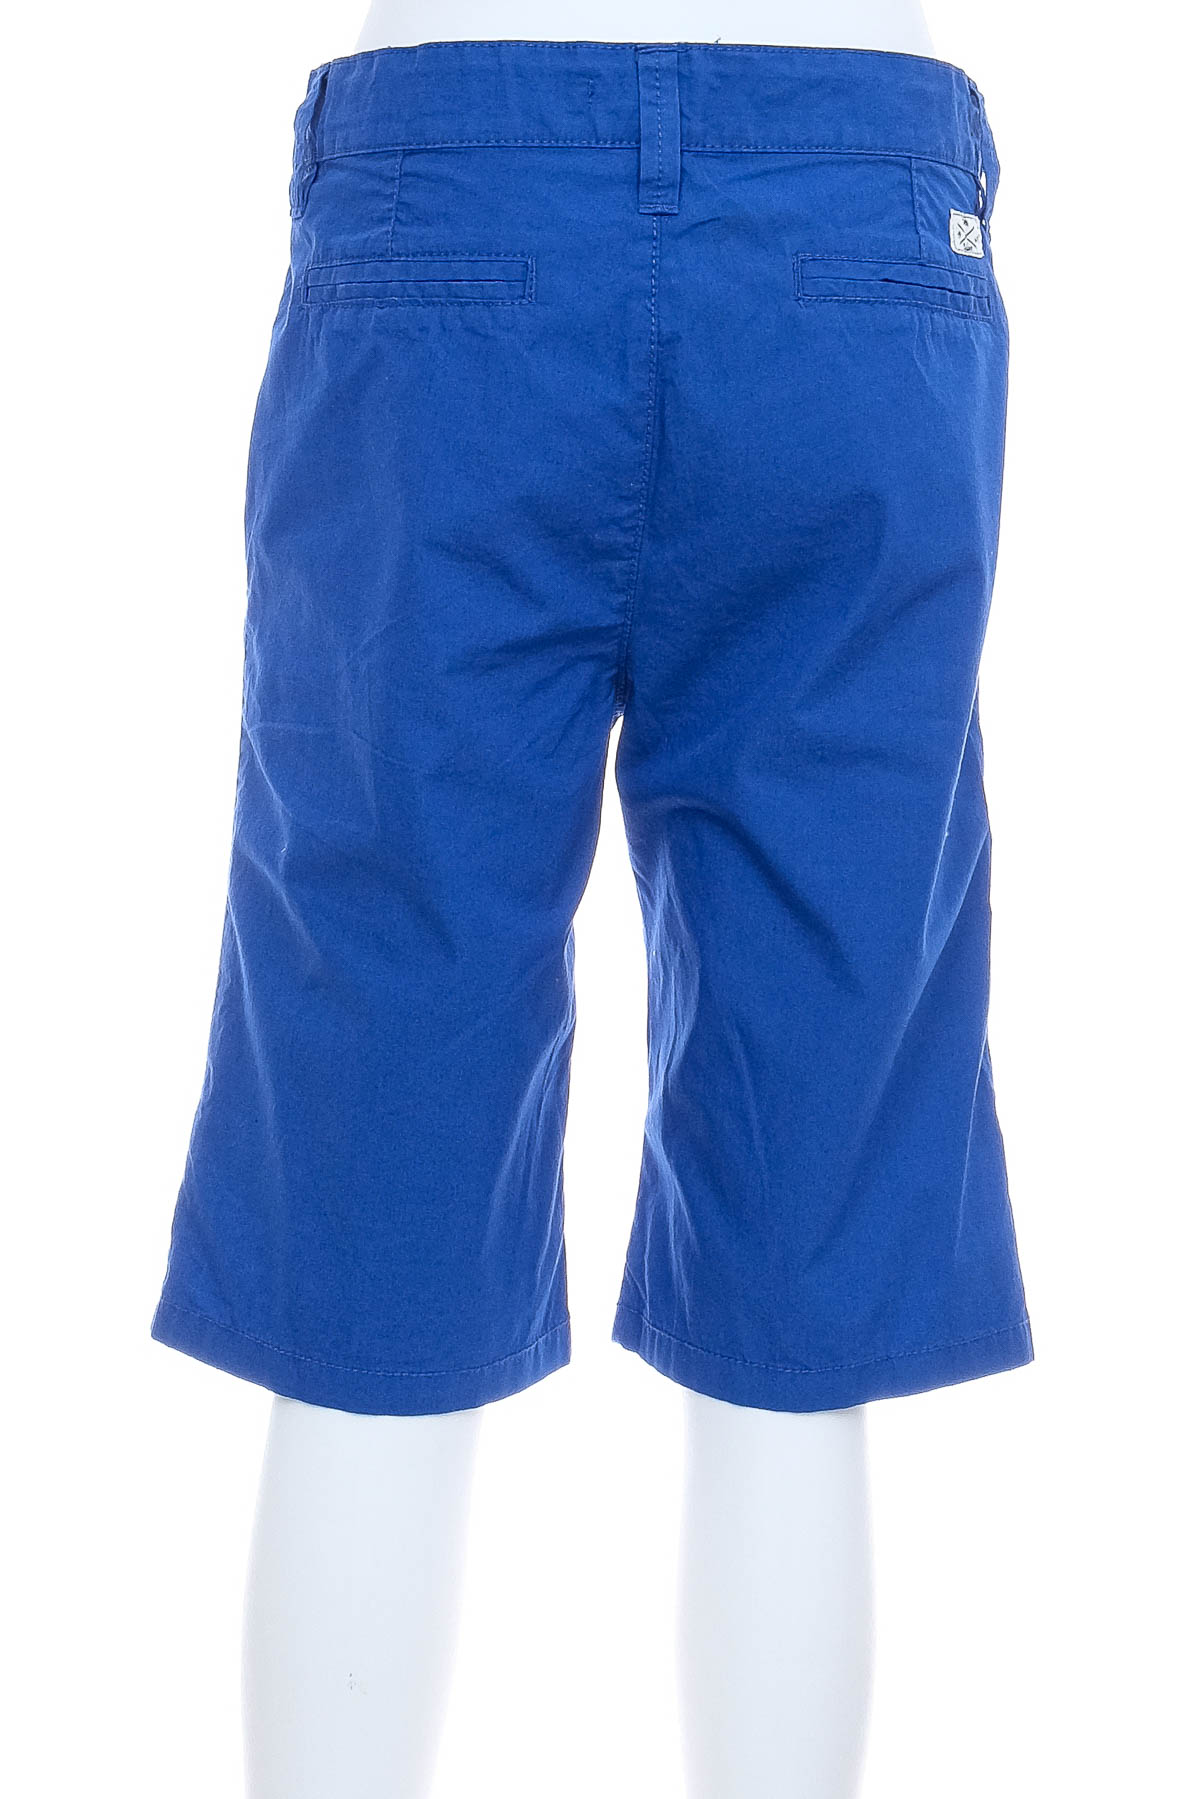 Shorts for boys - TOM TAILOR - 1